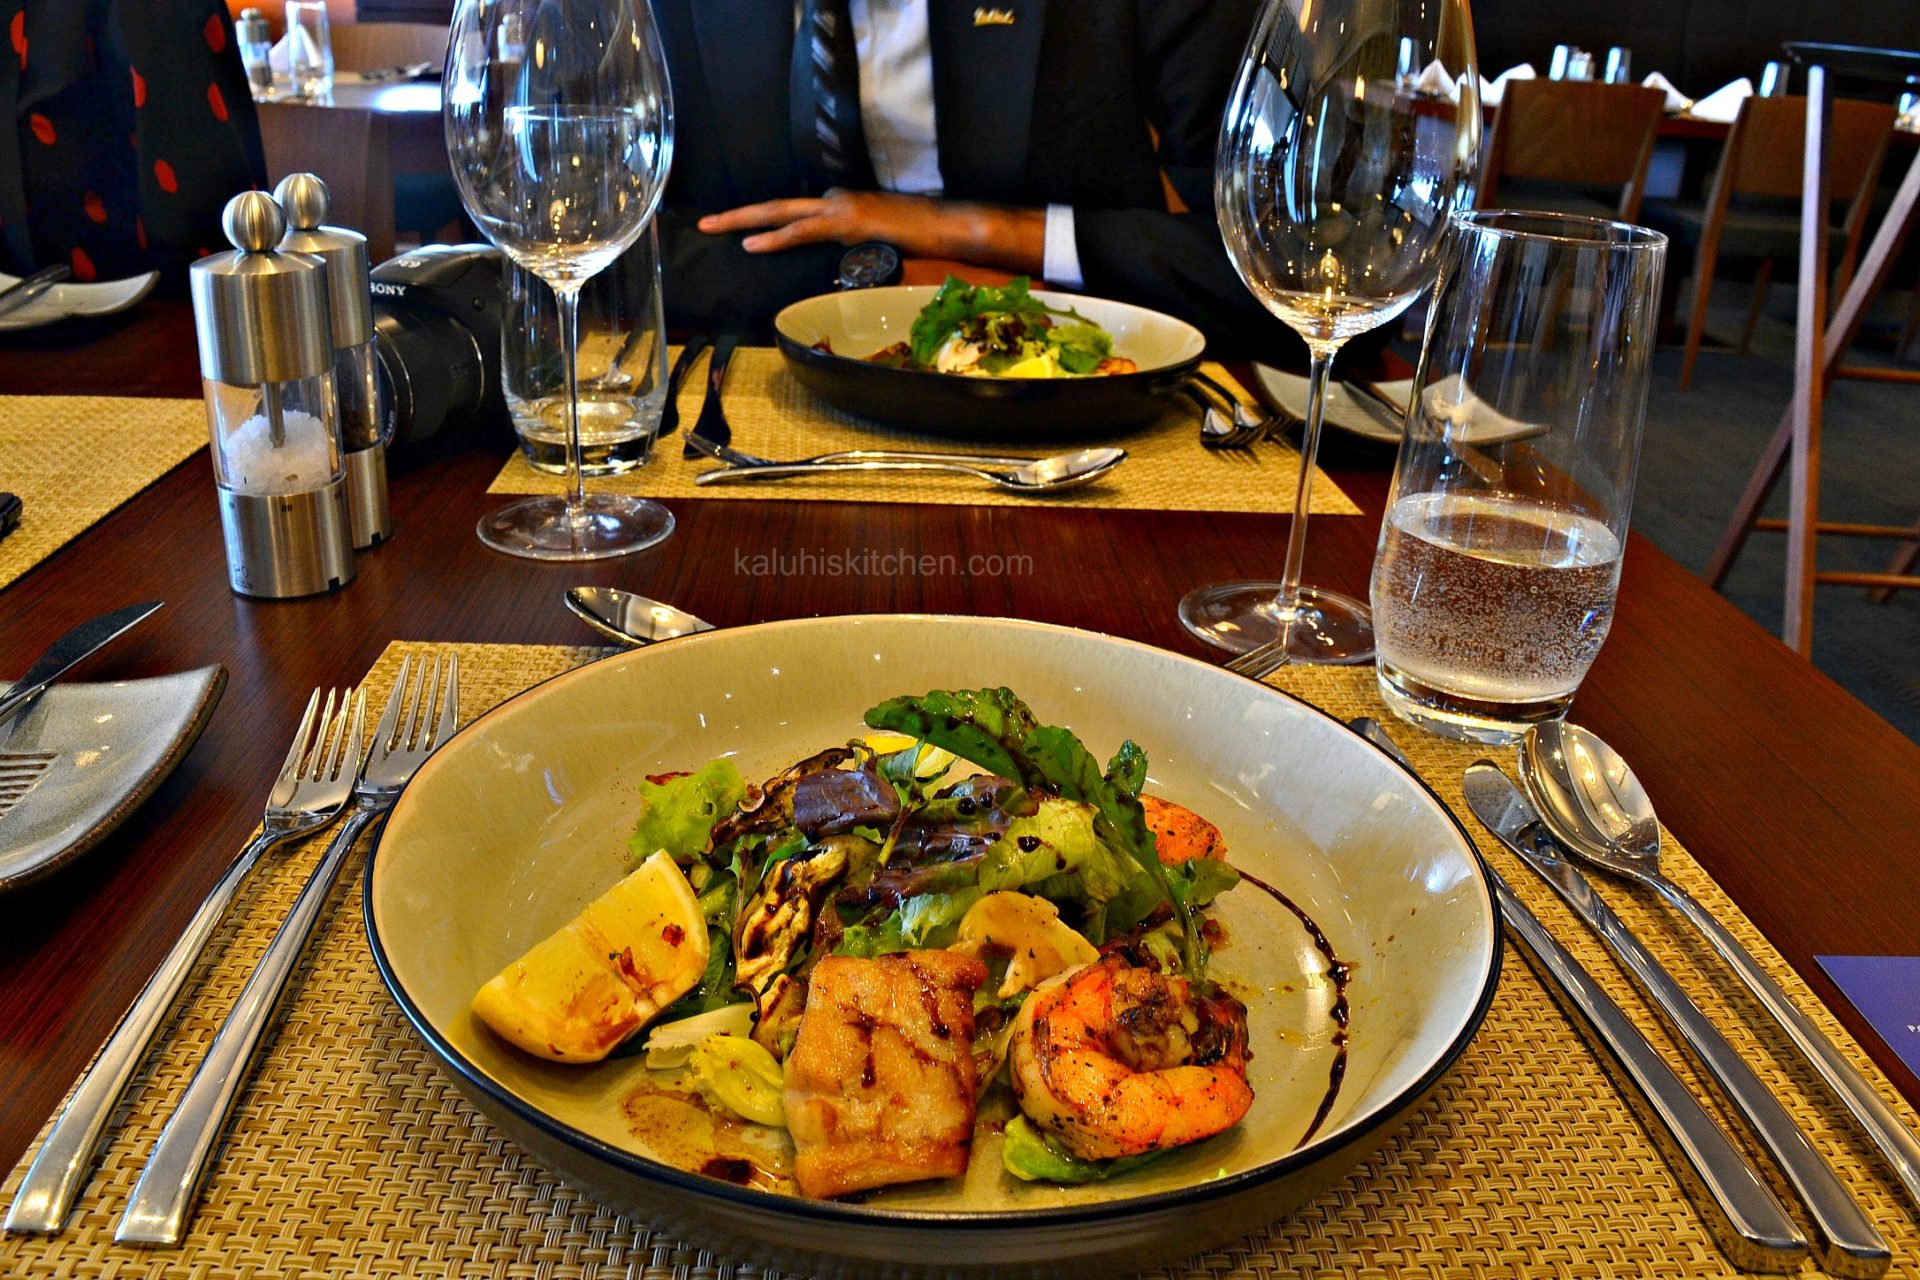 malindi salad with scallops, prawns, seared snapper and assorted greens had such fine balance_kaluhiskitchen.com